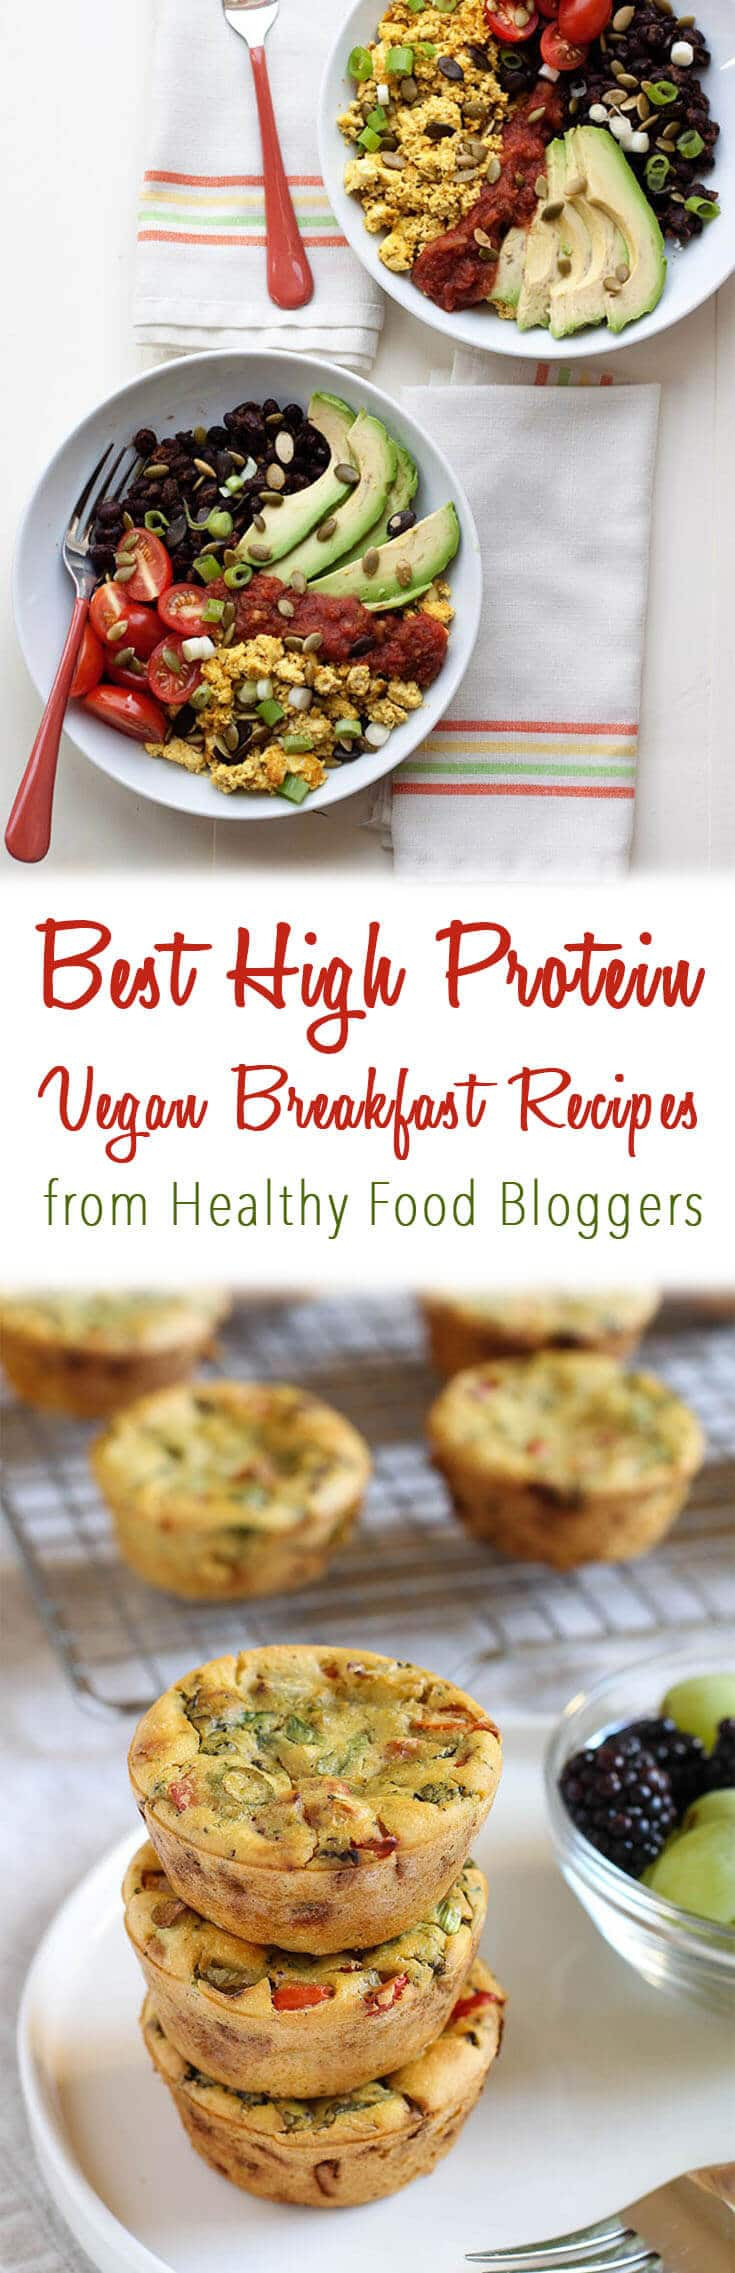 Healthy Vegan Breakfast Recipes
 Best High Protein Vegan Breakfast Recipes from Healthy